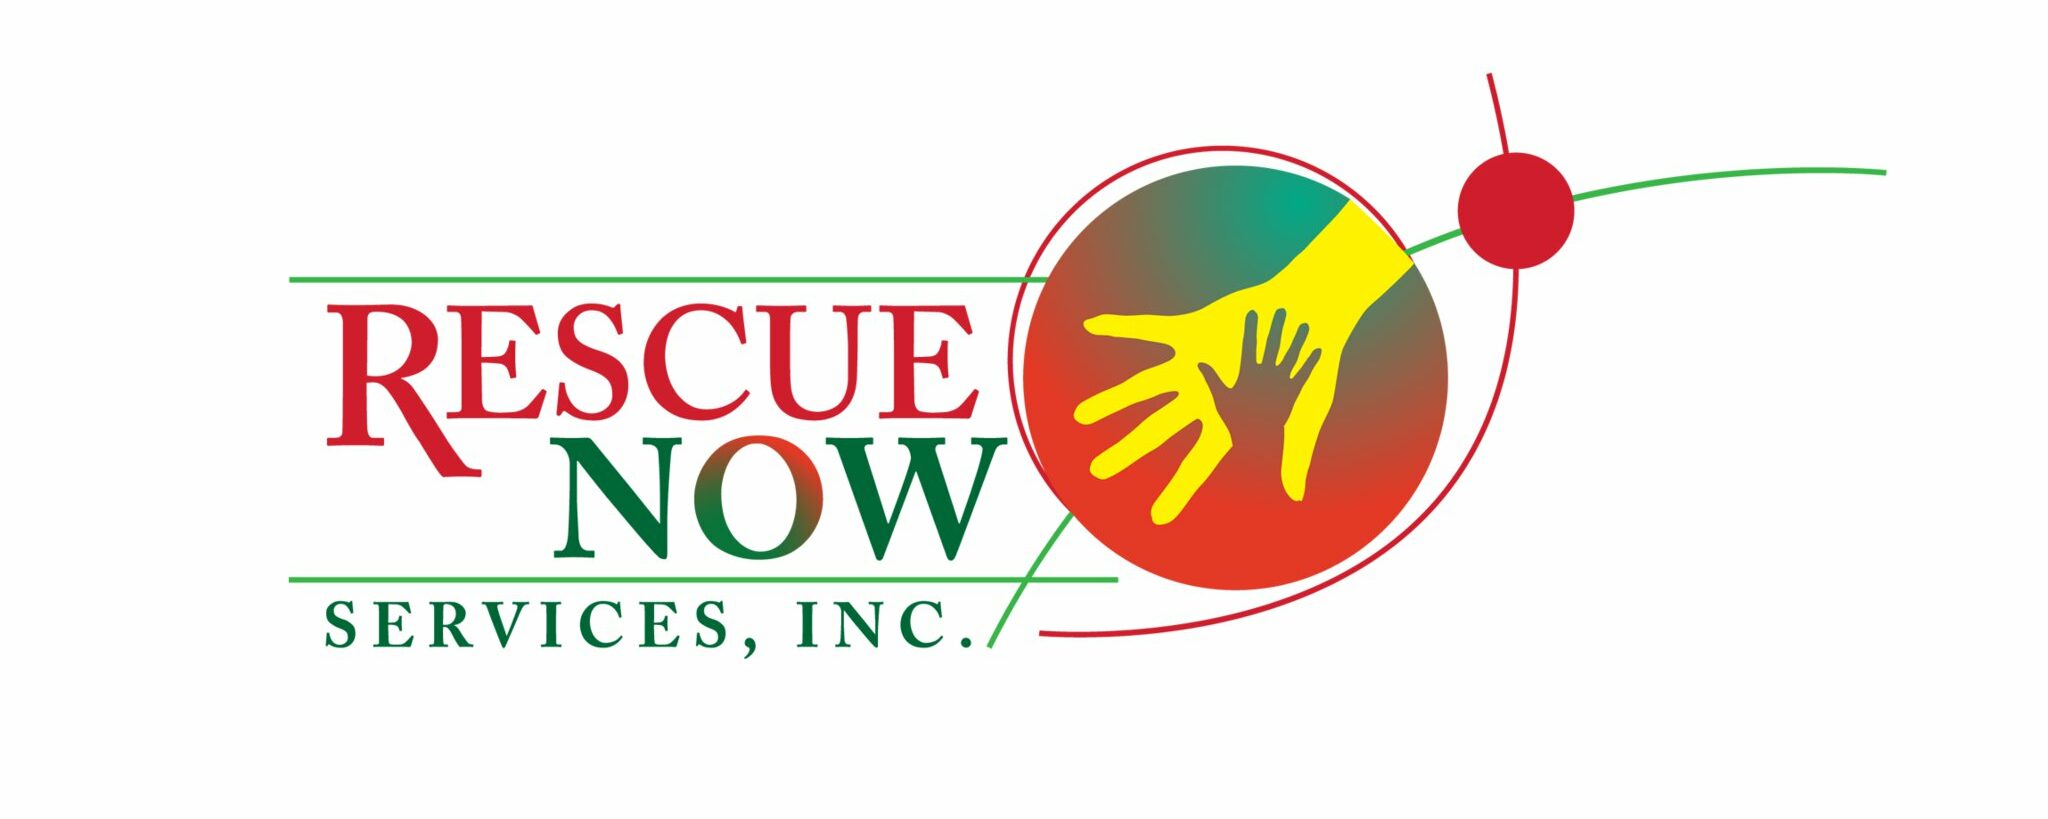 Rescue Now Services